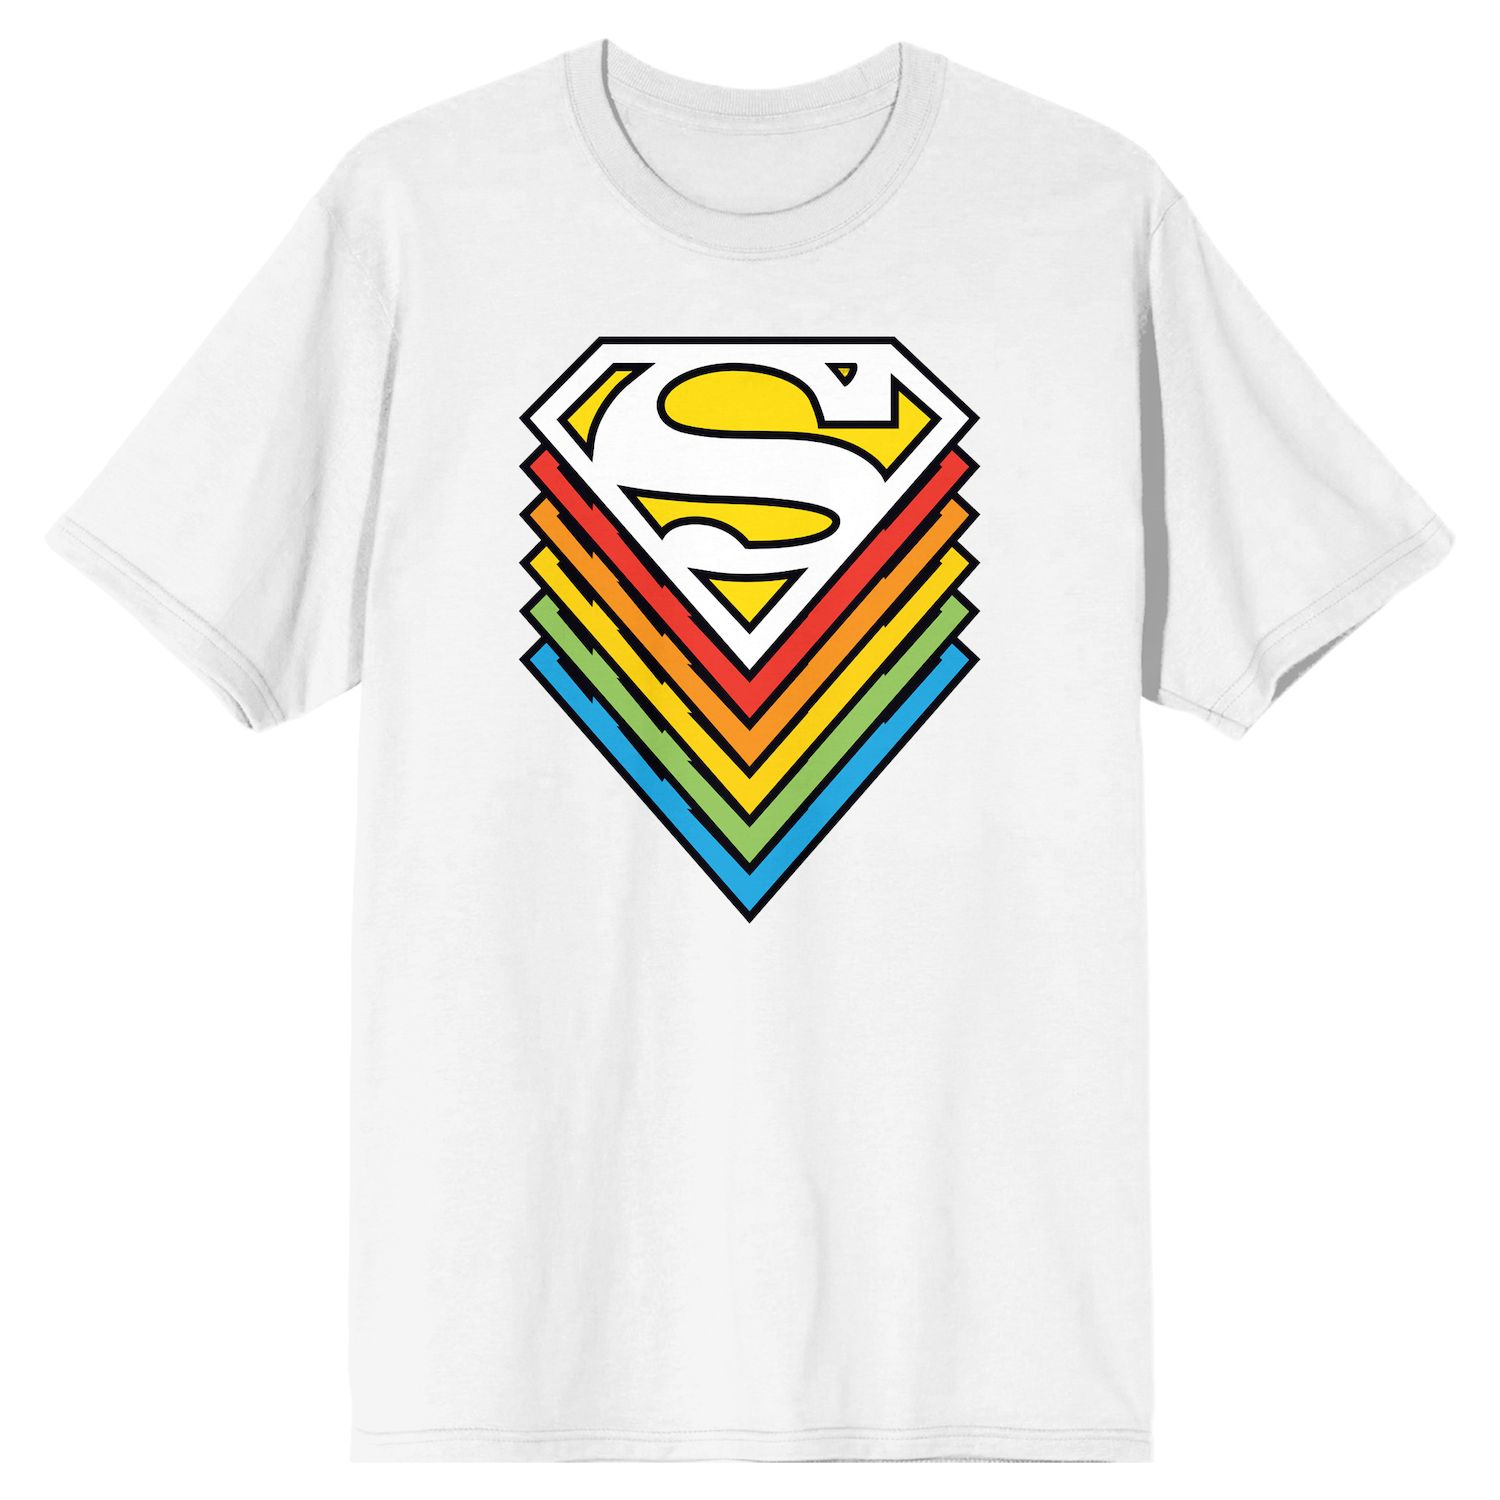 Мужская футболка с логотипом Супермена и комиксов Licensed Character